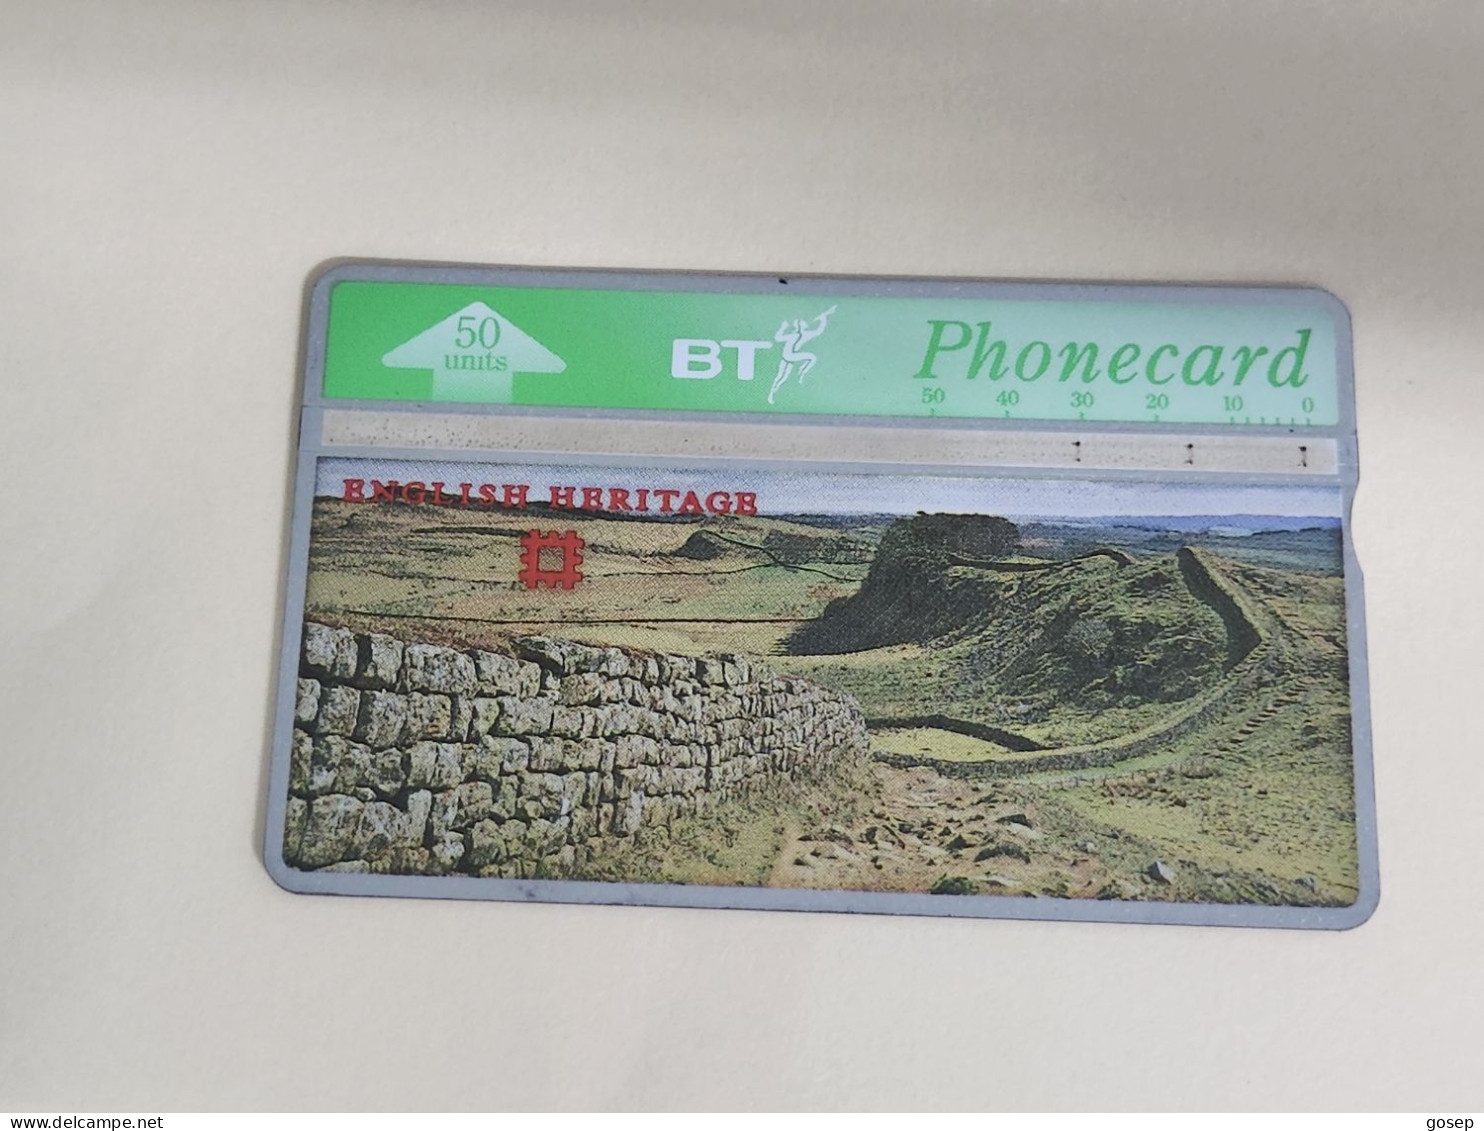 United Kingdom-(BTA107)-HERITAGE-Hadrian's Wall-(176)(50units)(527K18056)price Cataloge3.00£-used+1card Prepiad Free - BT Advertising Issues